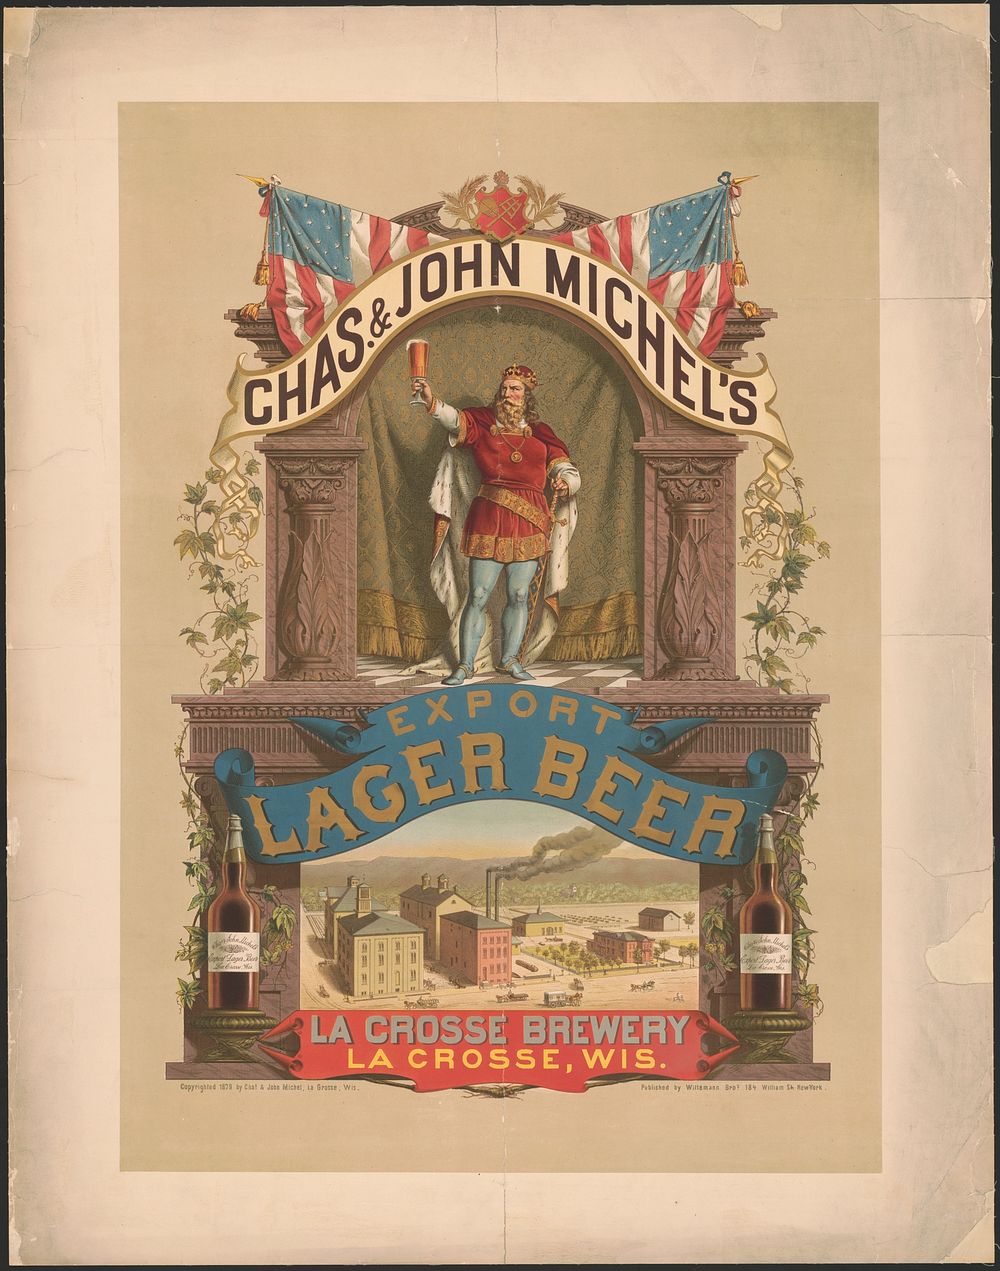 Chas. & John Michel's export lager beer, La Crosse brewery, La Crosse, Wis.